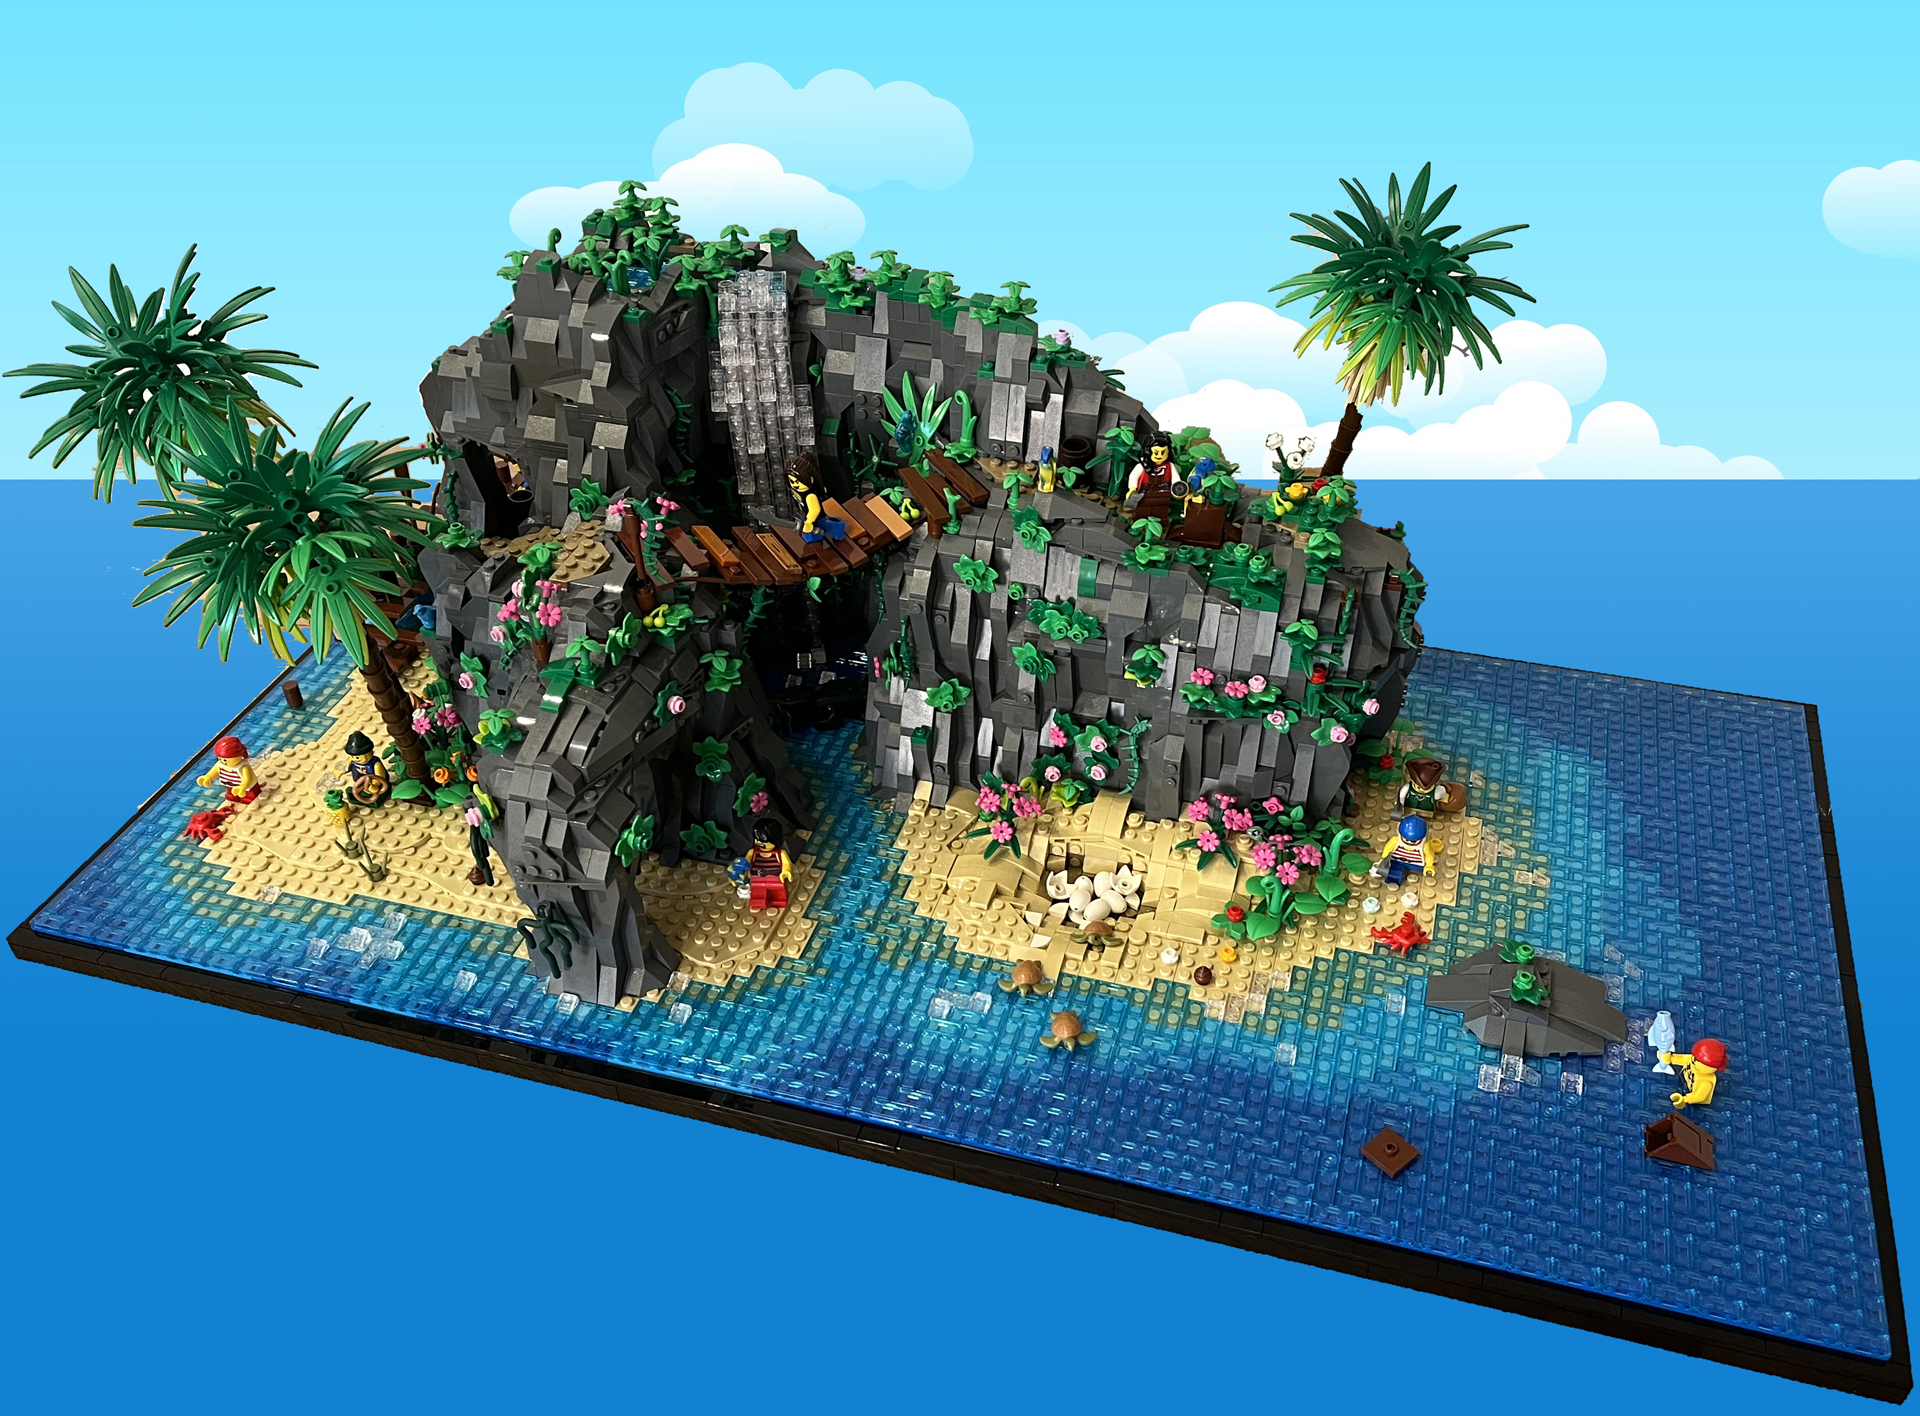 Treasure Island” by Filibbooo – MOCs – The home of Pirates